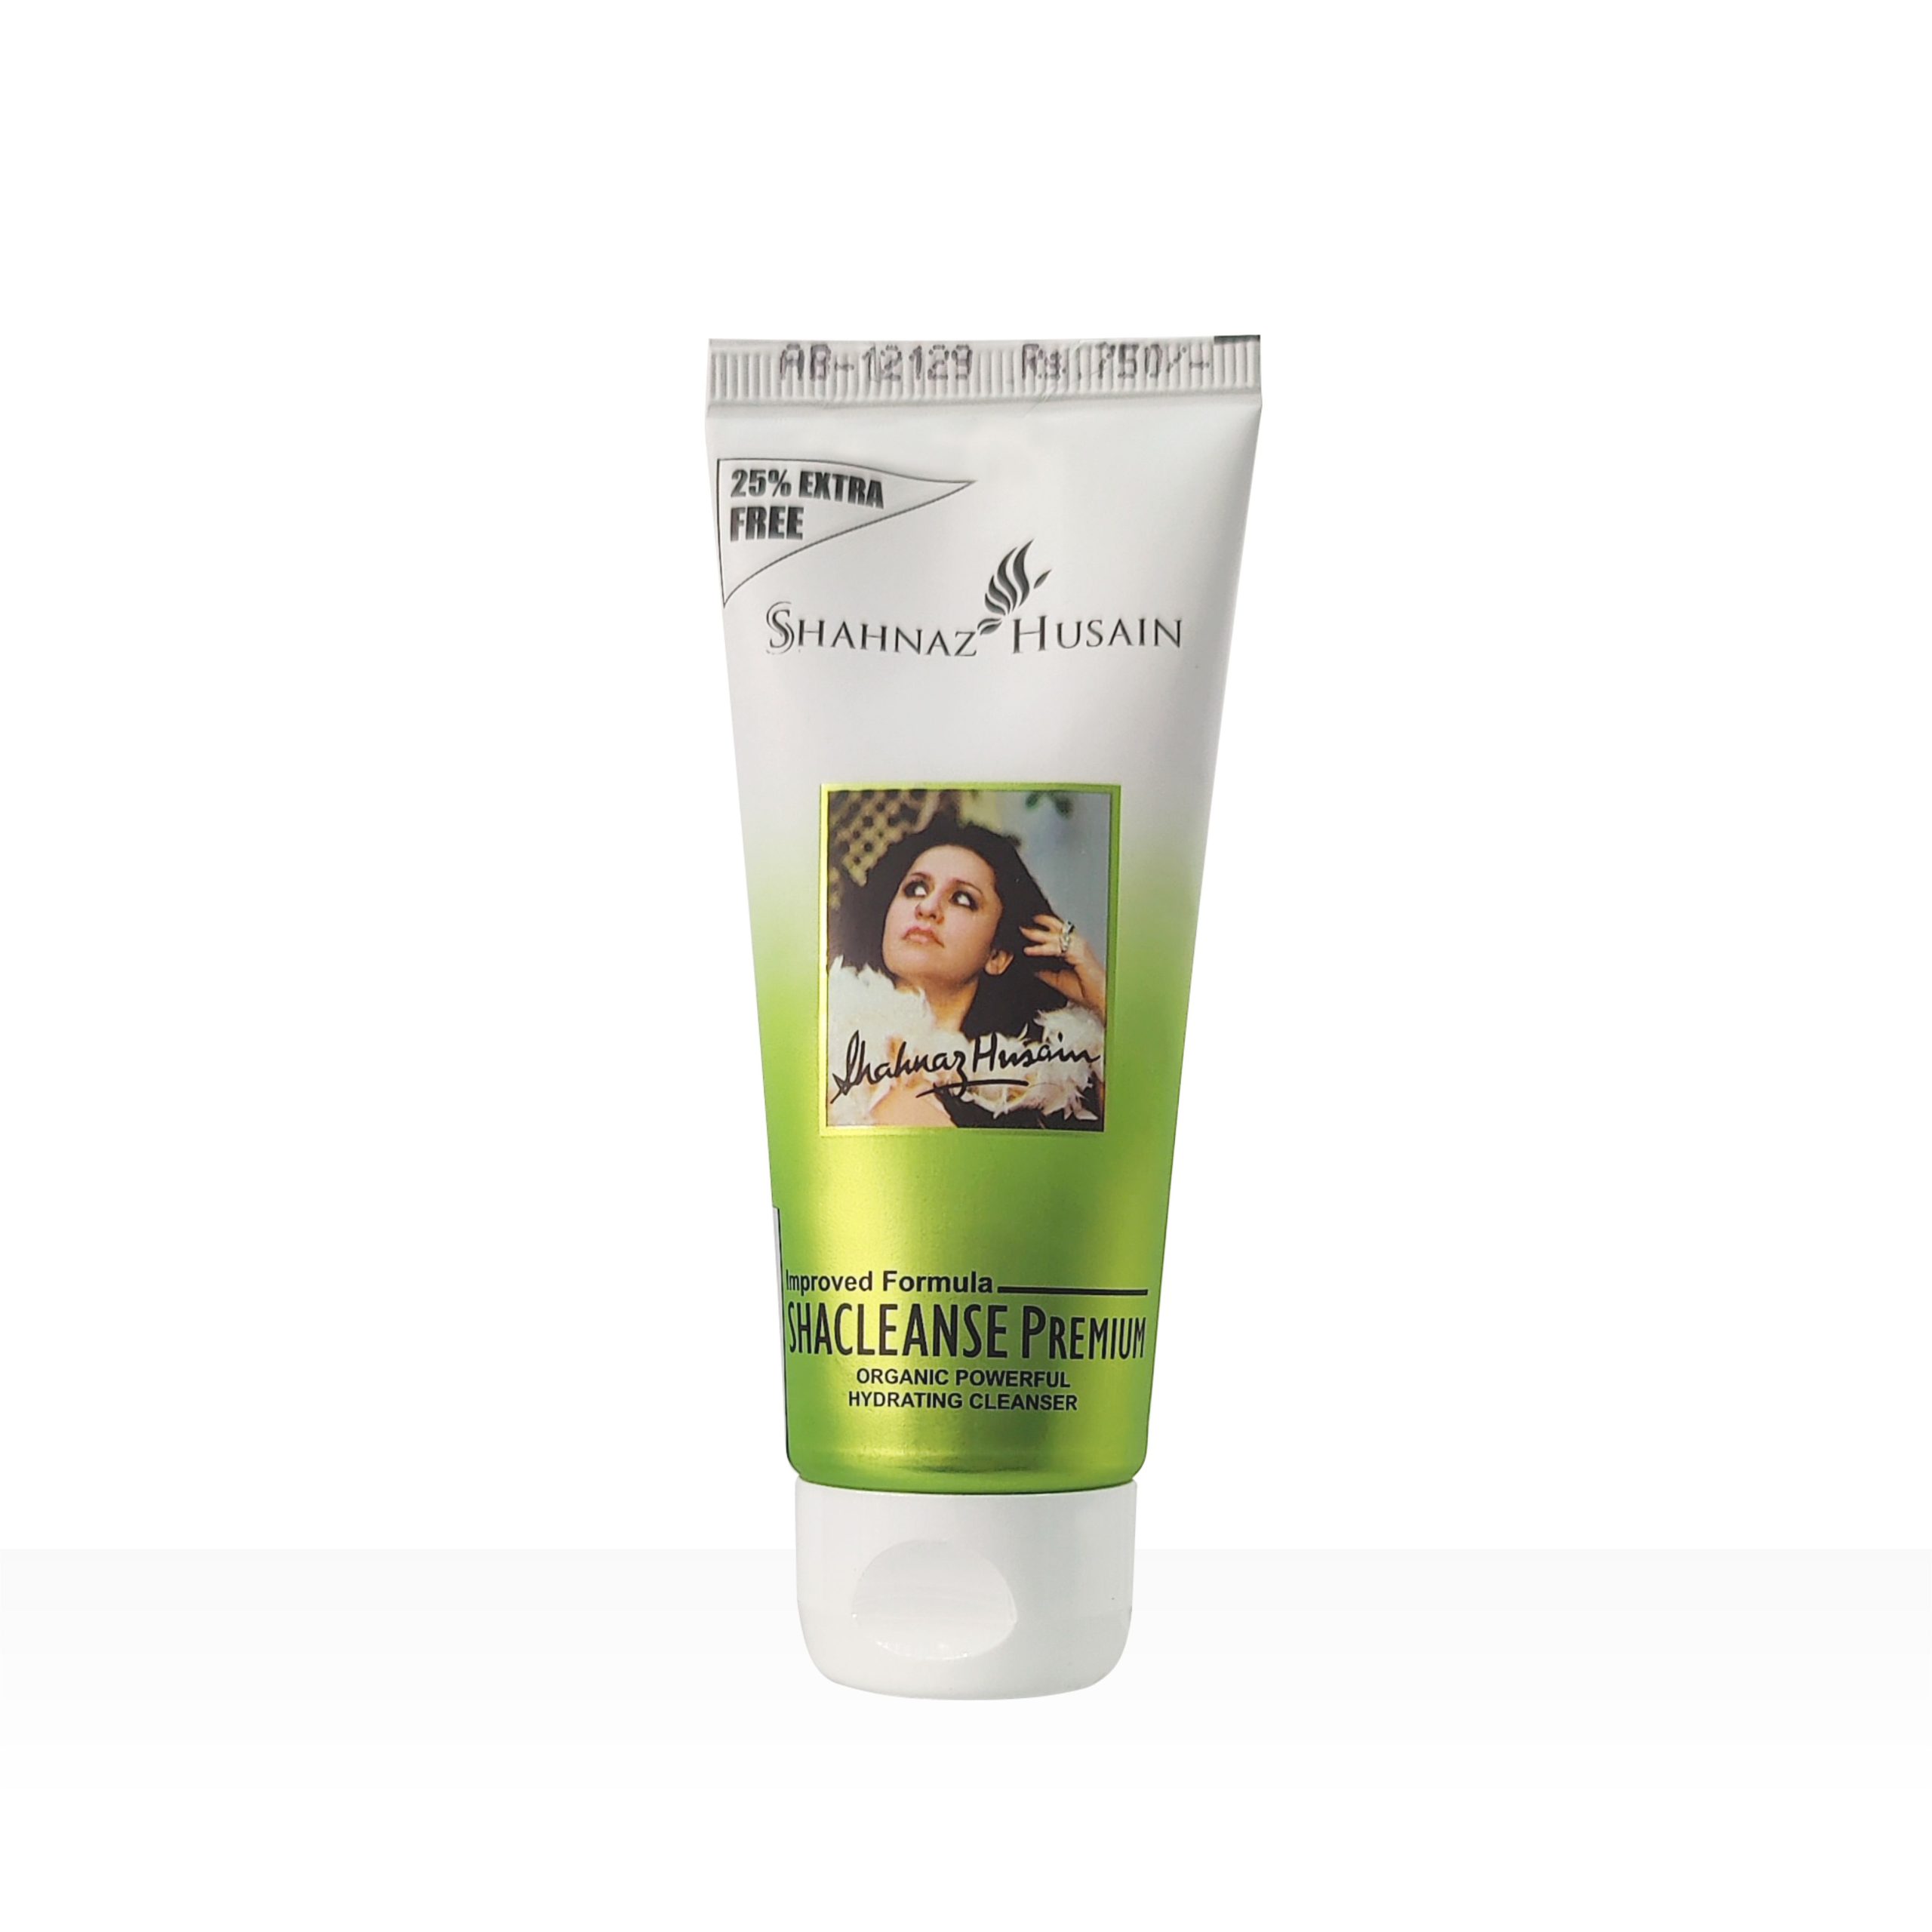 Shahnaz Husain Shacleanse Premium Tube Face Cleanser 50g